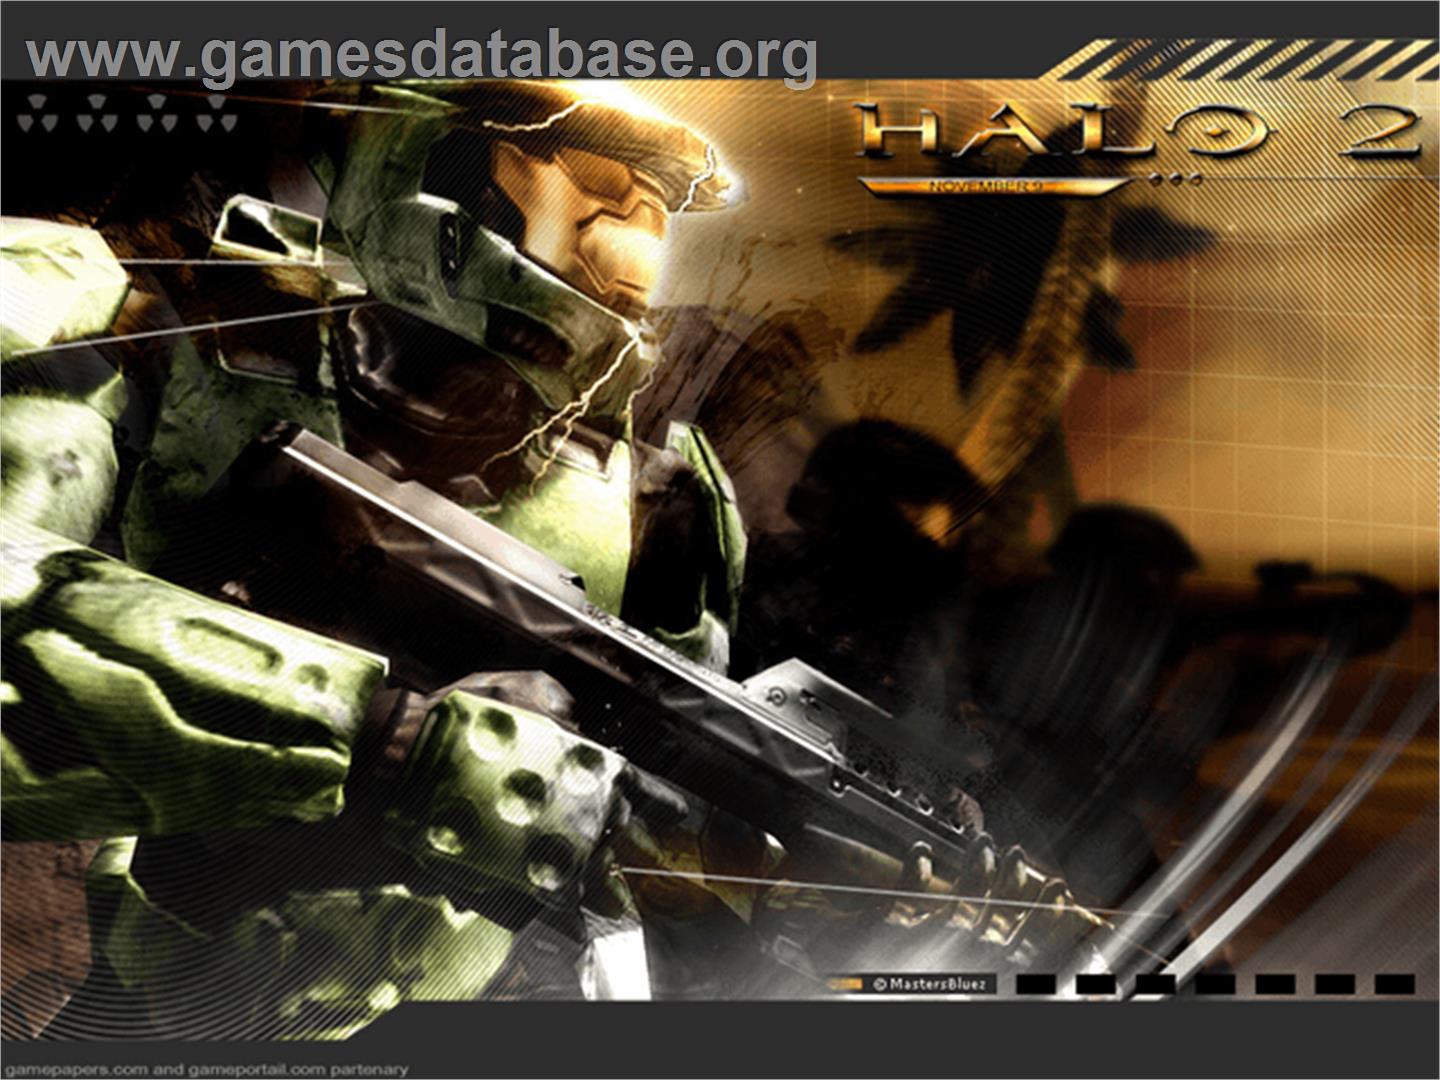 Halo 2 (Limited Collector's Edition) - Microsoft Xbox - Artwork - Title Screen